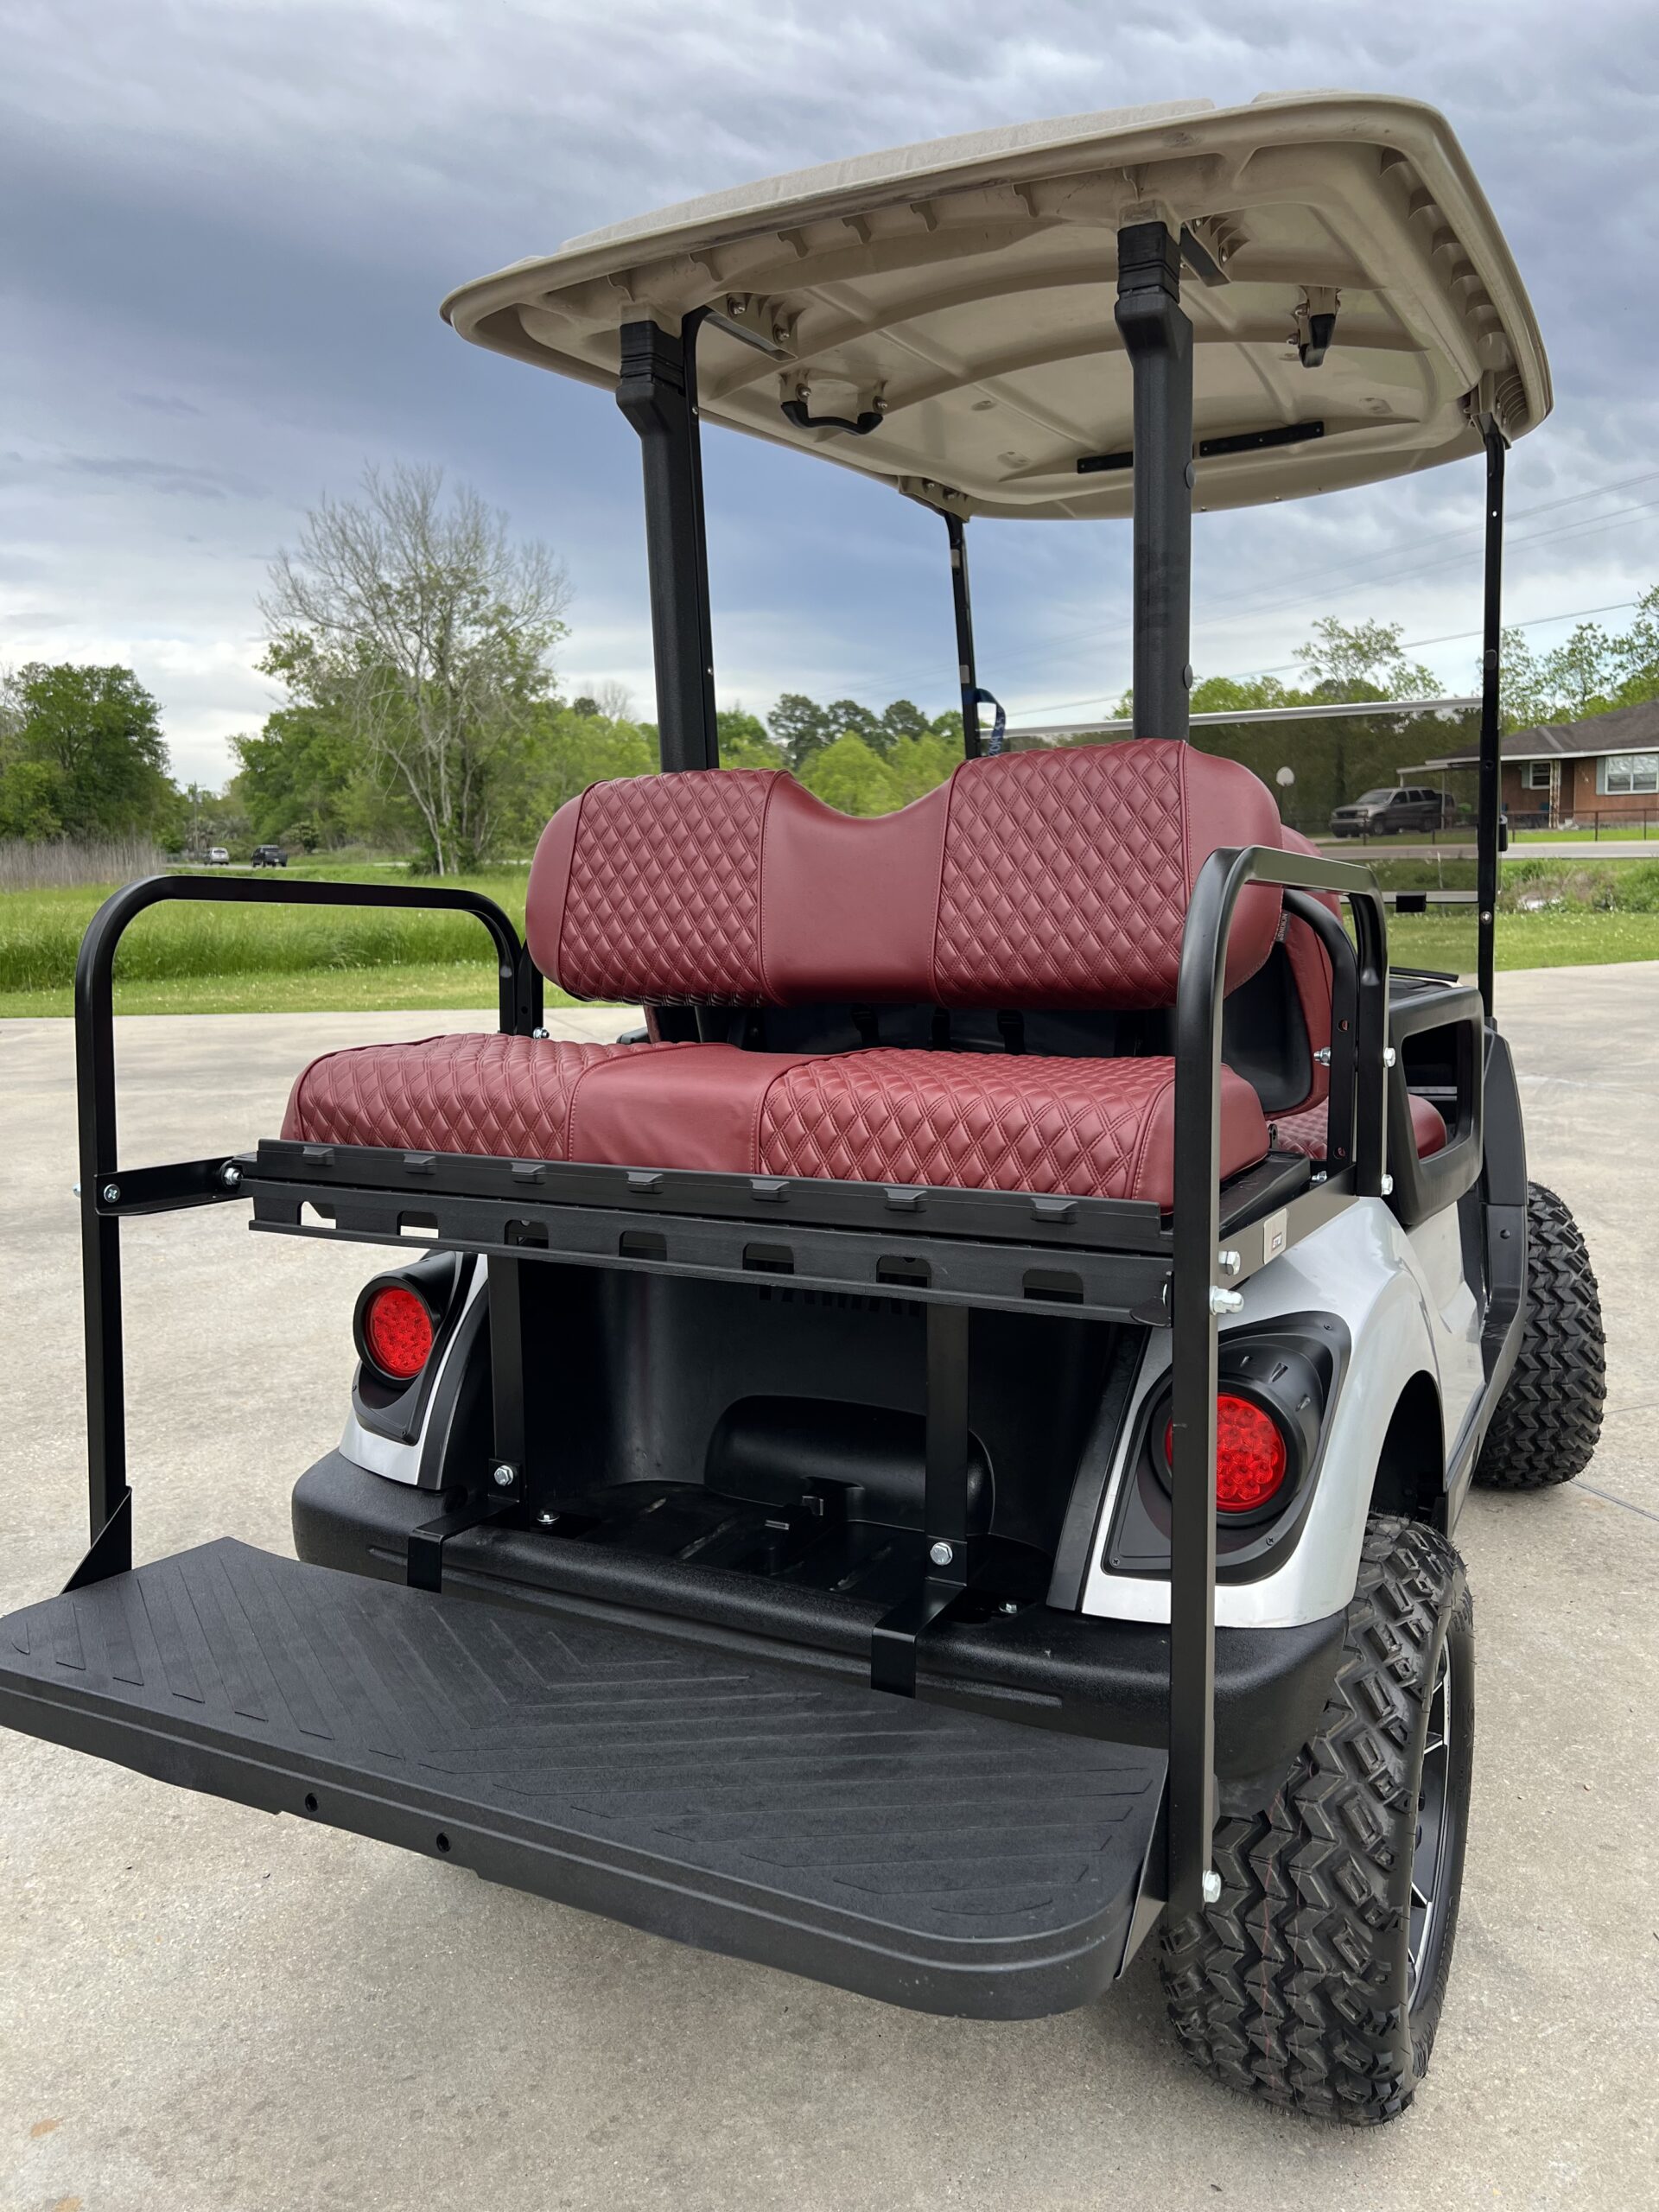 2019 Yamaha Lifted Golf Cart